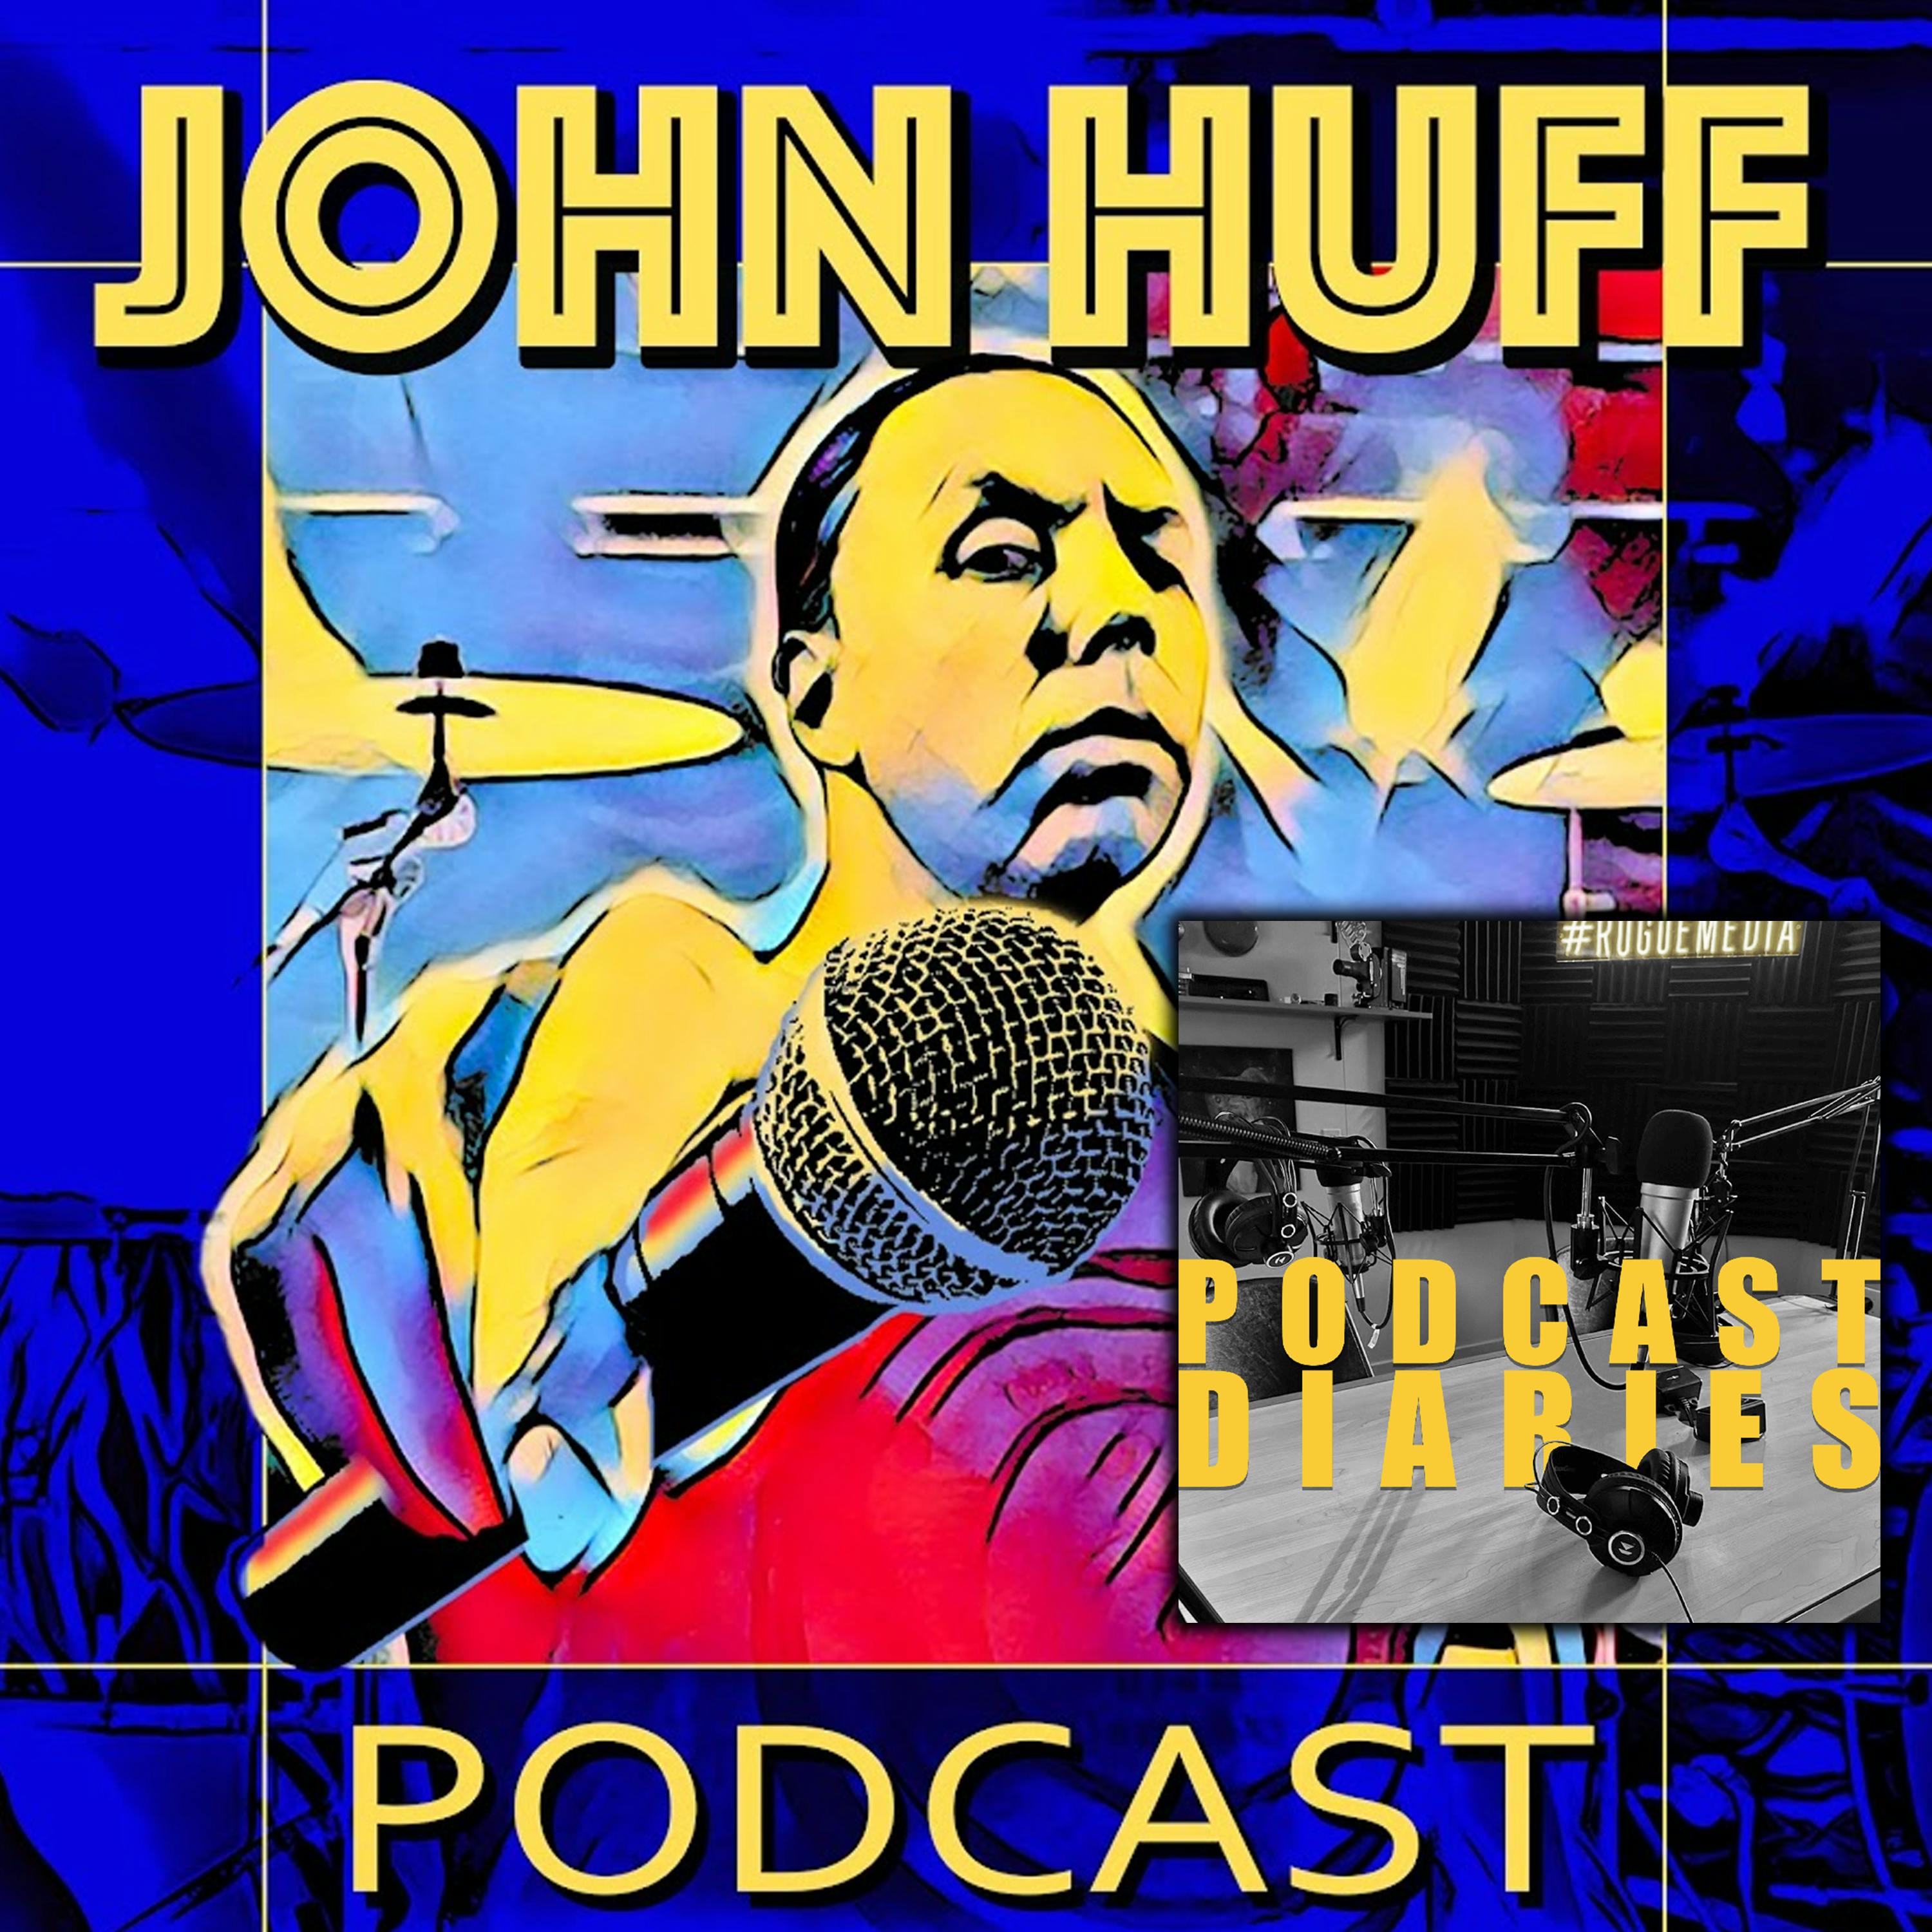 The John Huff Podcast